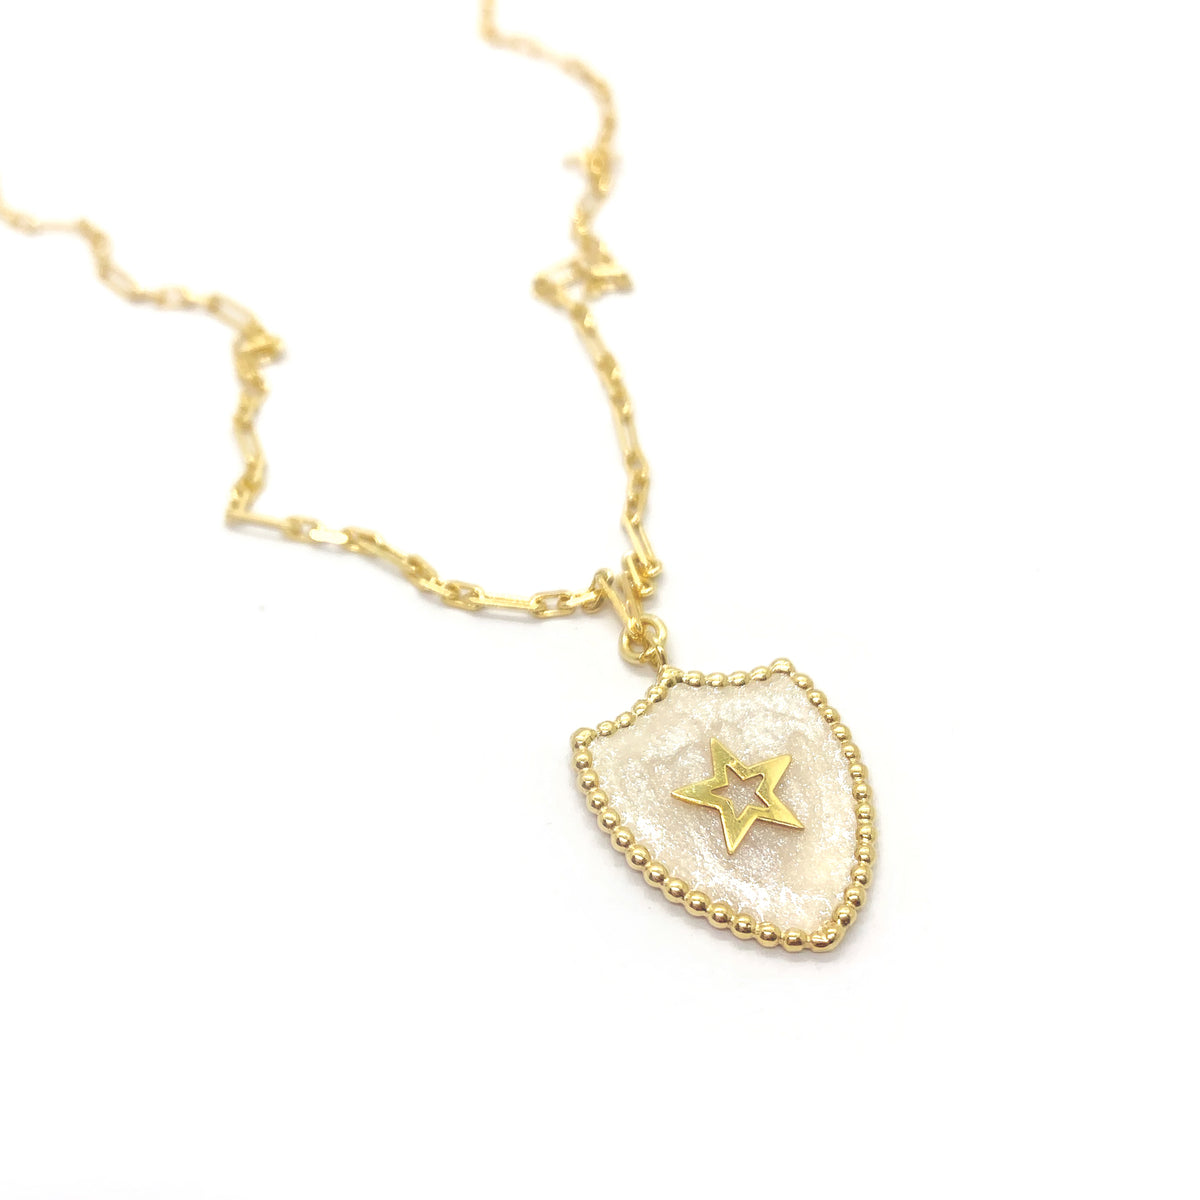 Star Badge Necklace - SALE!